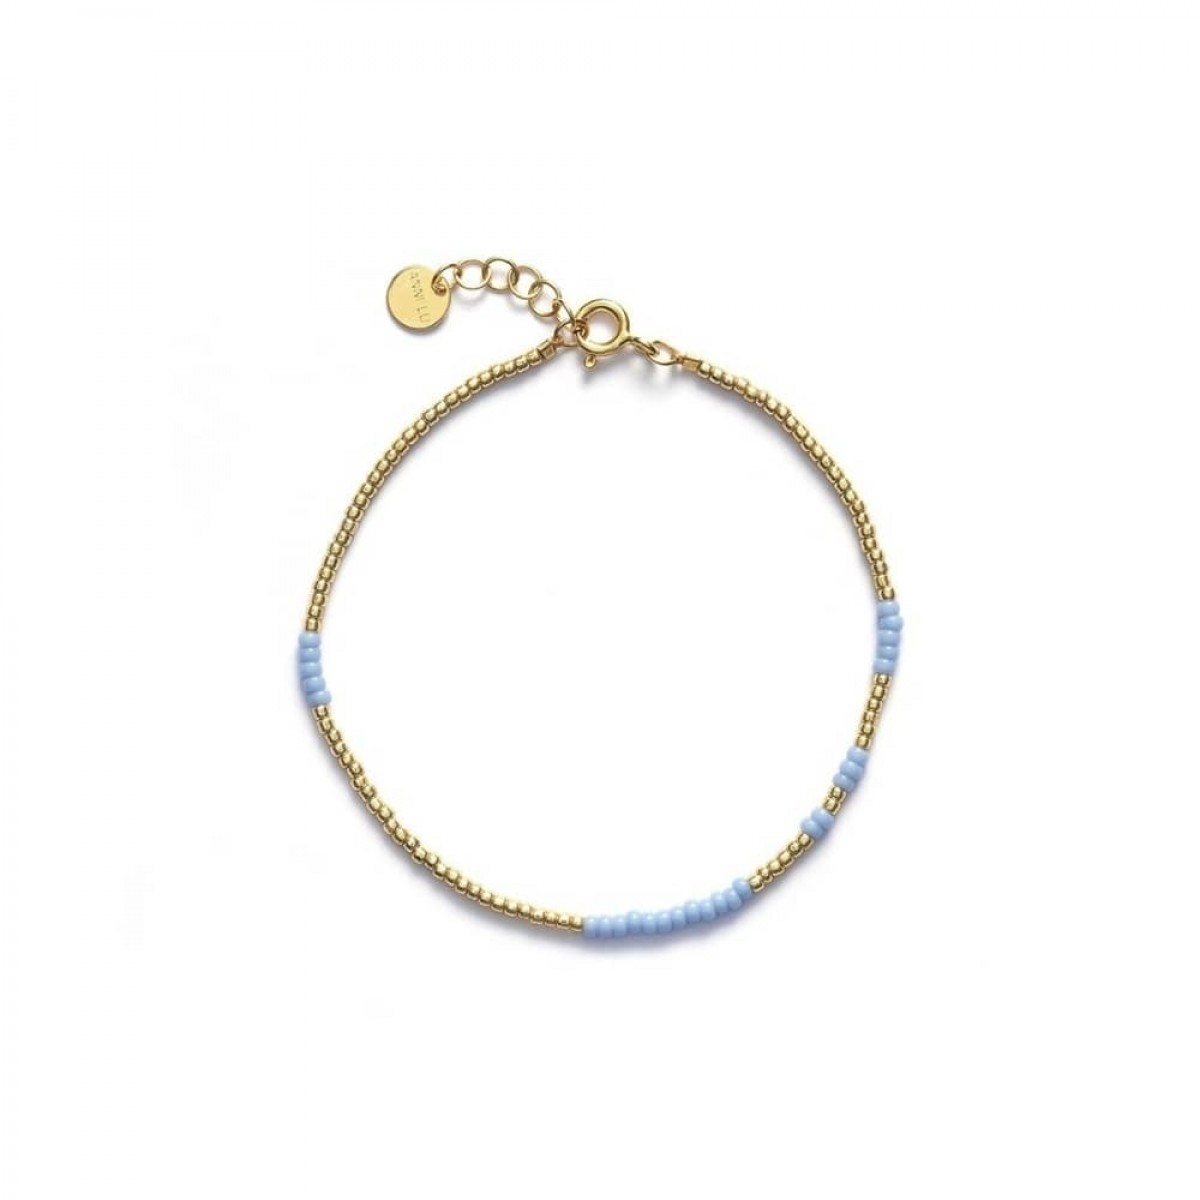 anni lu asym bracelet - light blue - front